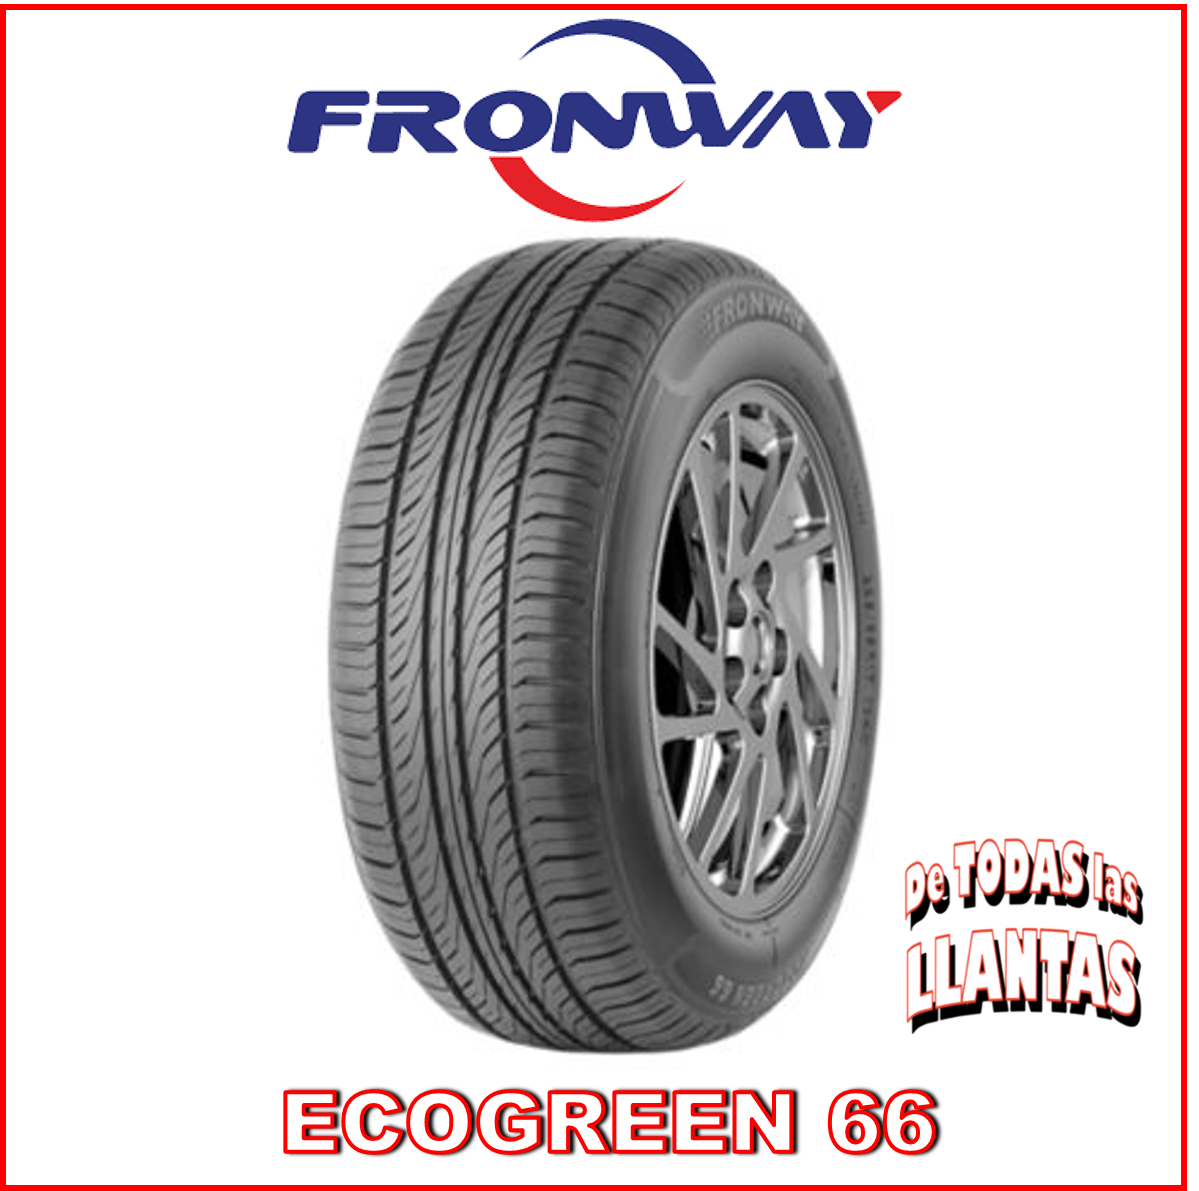 "Llanta Fronway EcoGreen 66"